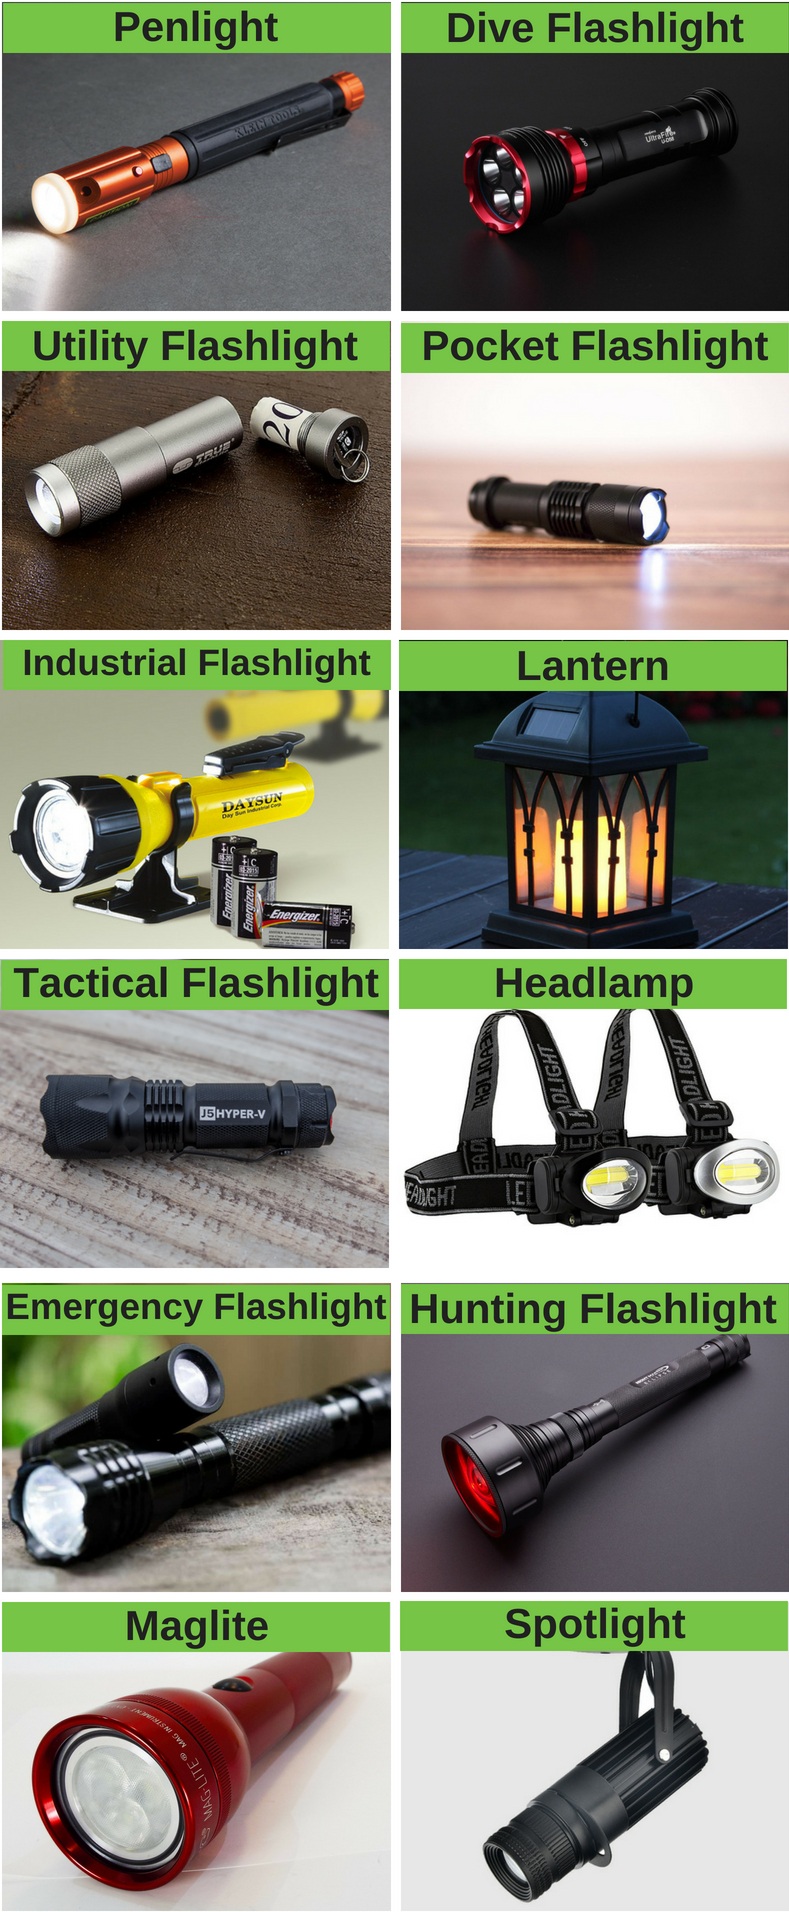 Types of Flashlights